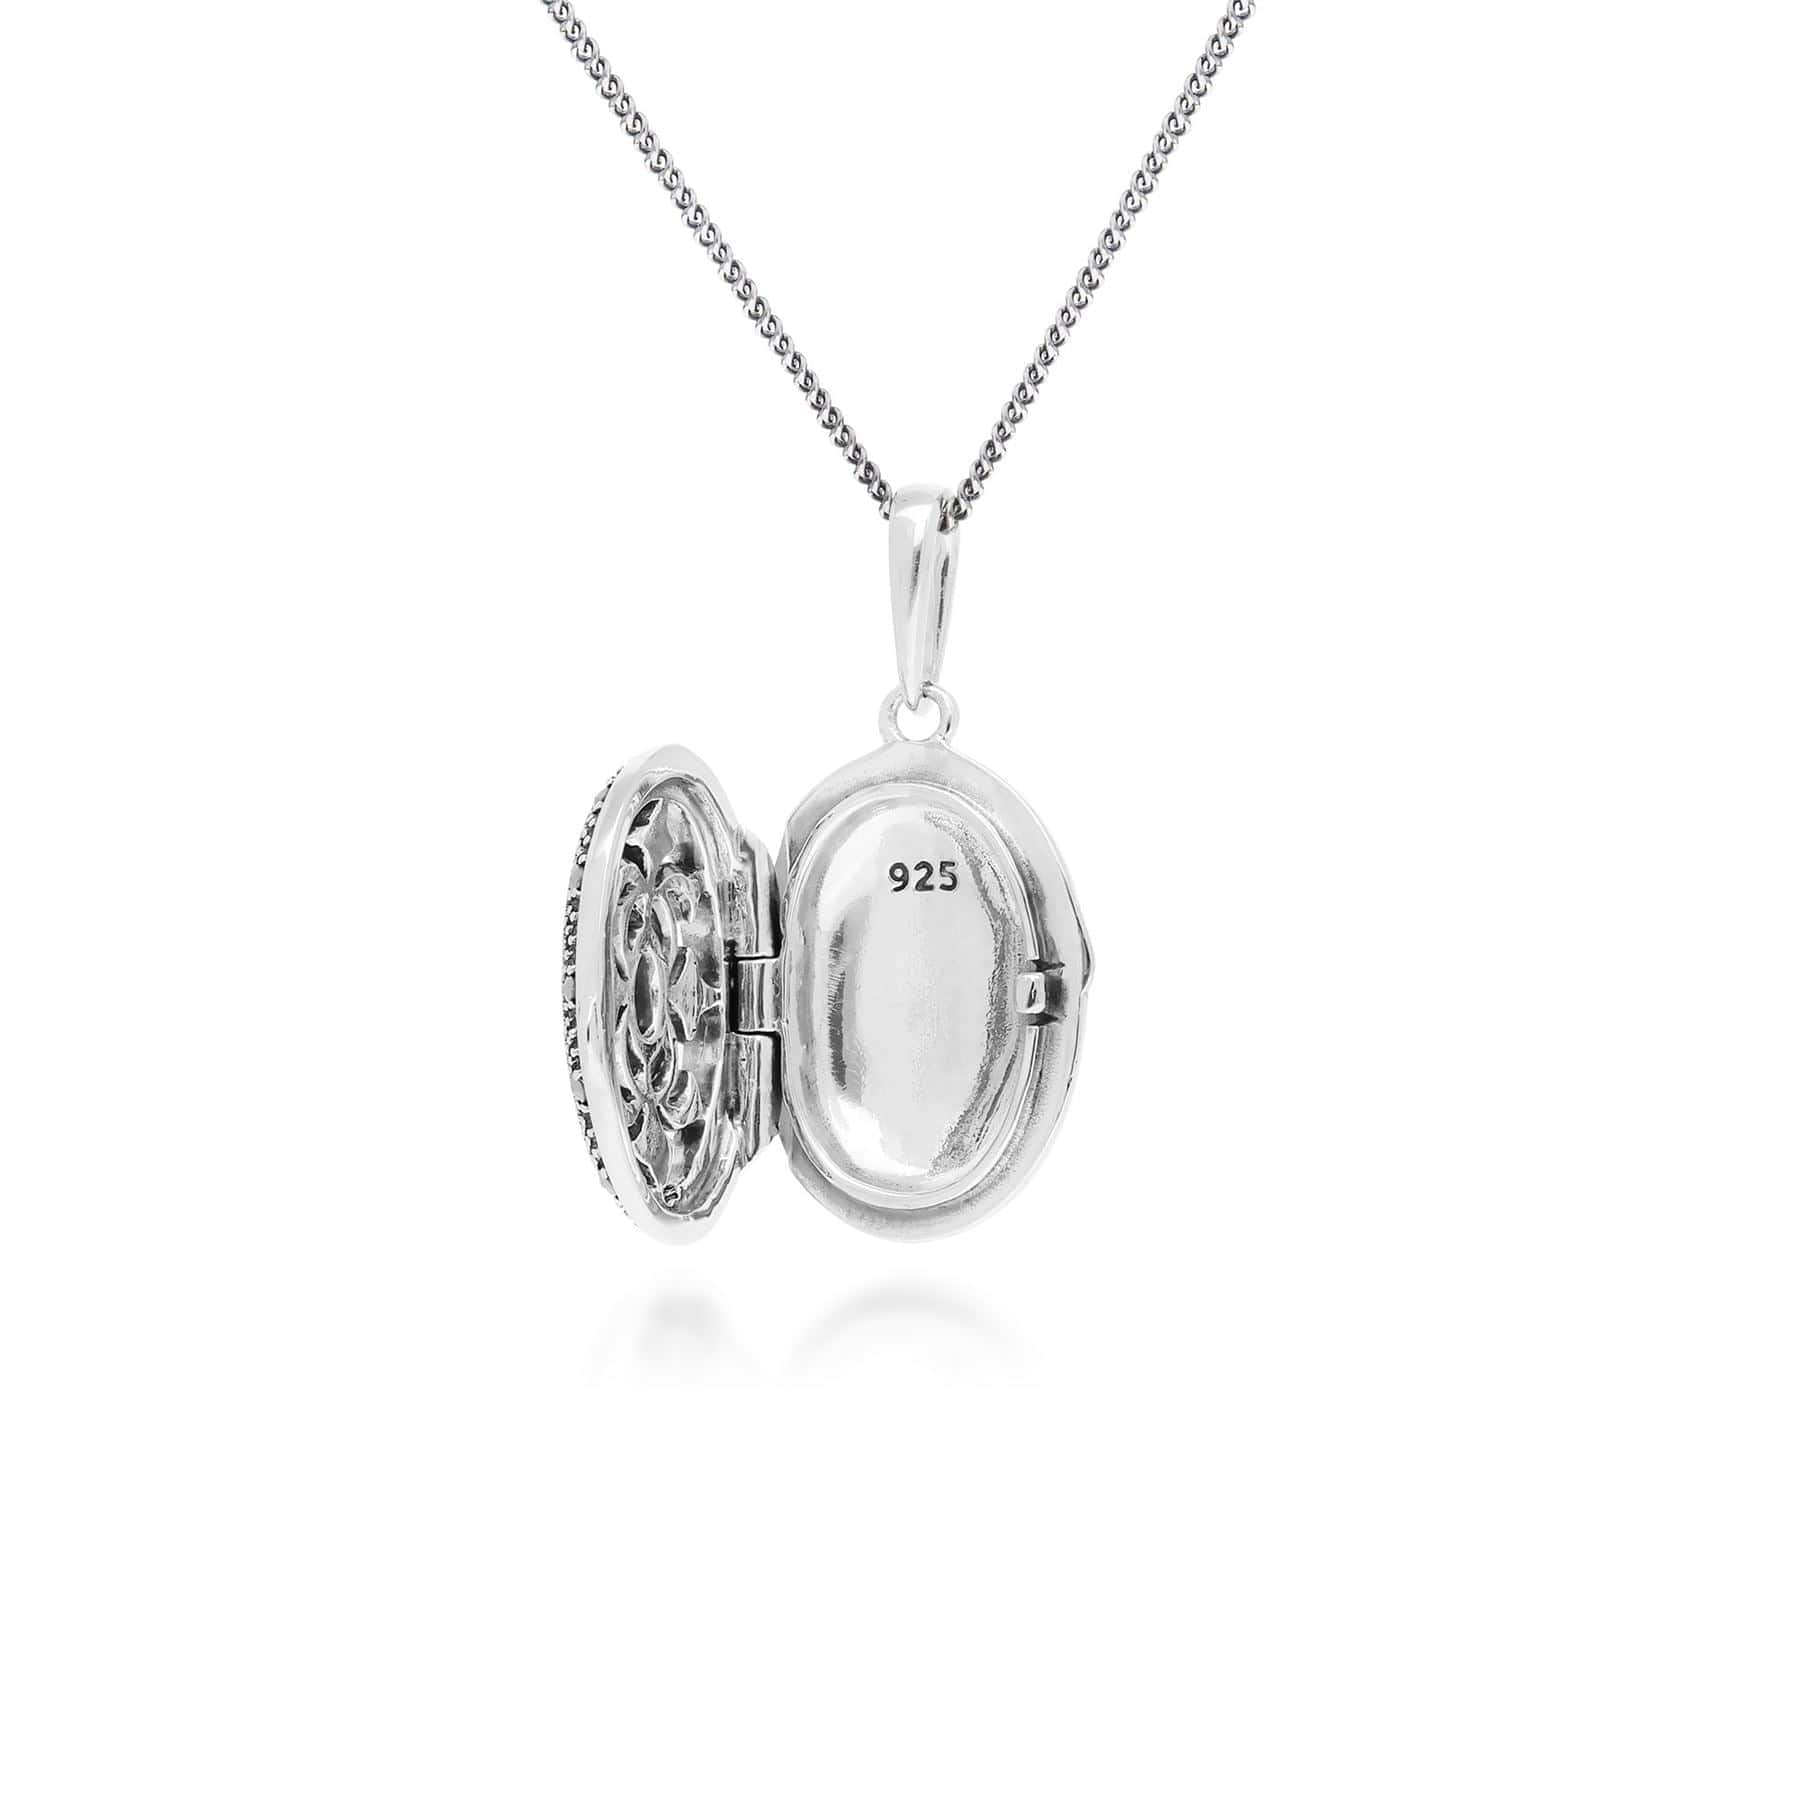 214N716204925 Art Nouveau Style Oval Garnet & Marcasite Locket Necklace in Sterling Silver 3